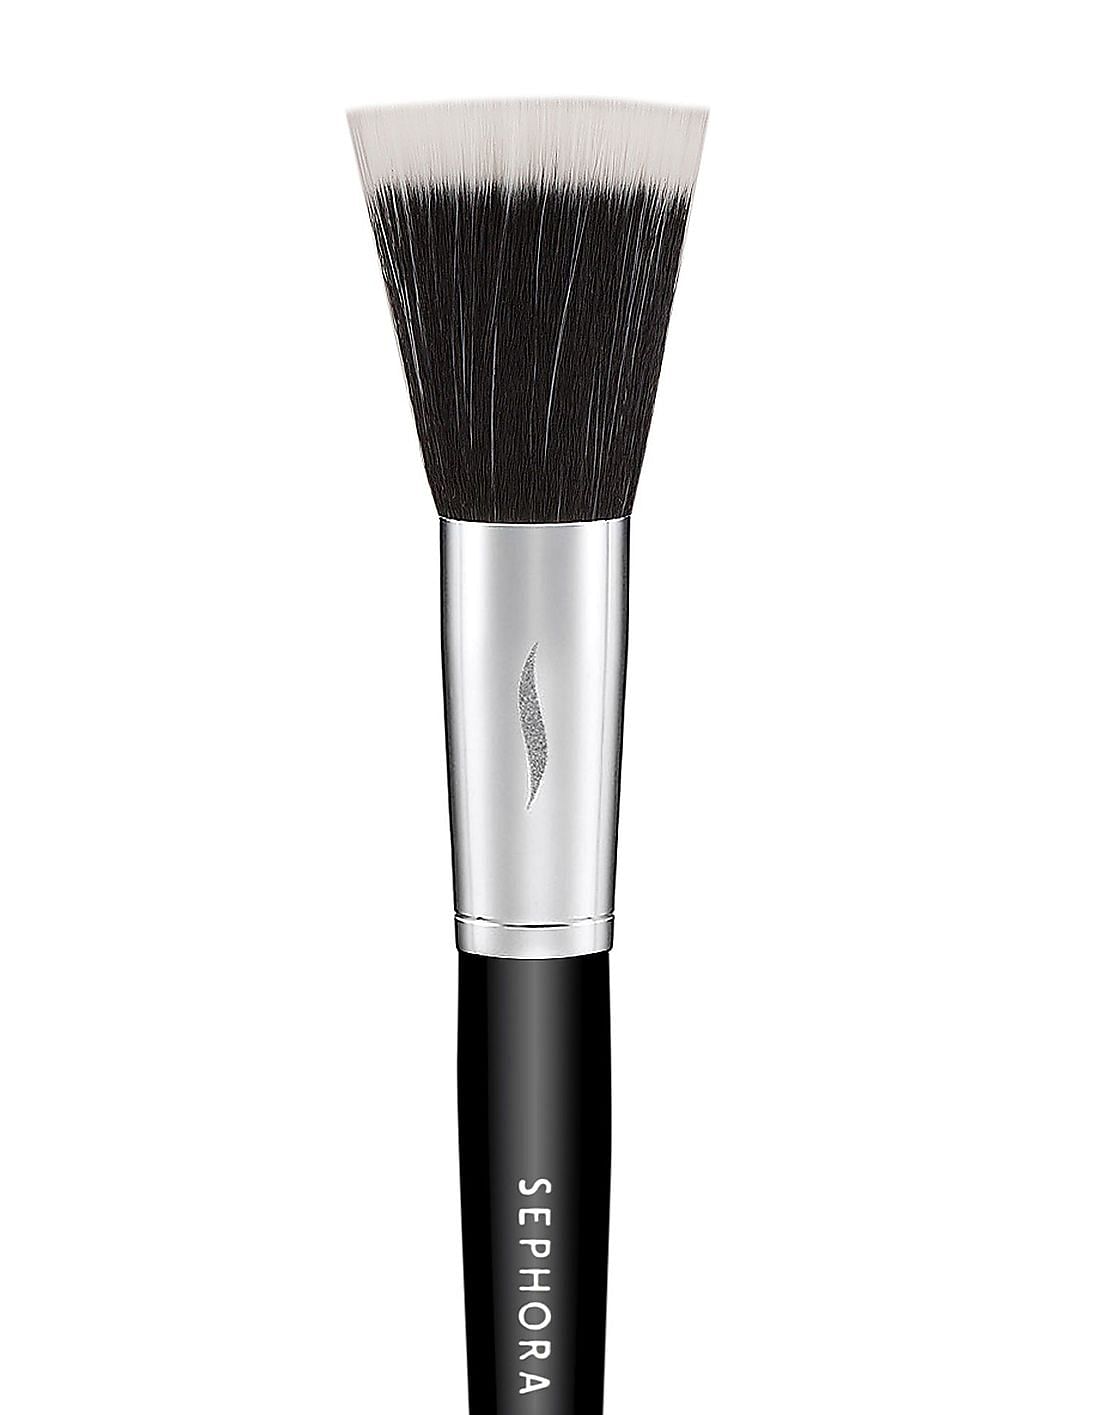 ❤ MakeupByJoyce ❤** !: Review: Sephora Professionnel Platinum Stippling  Brush #44